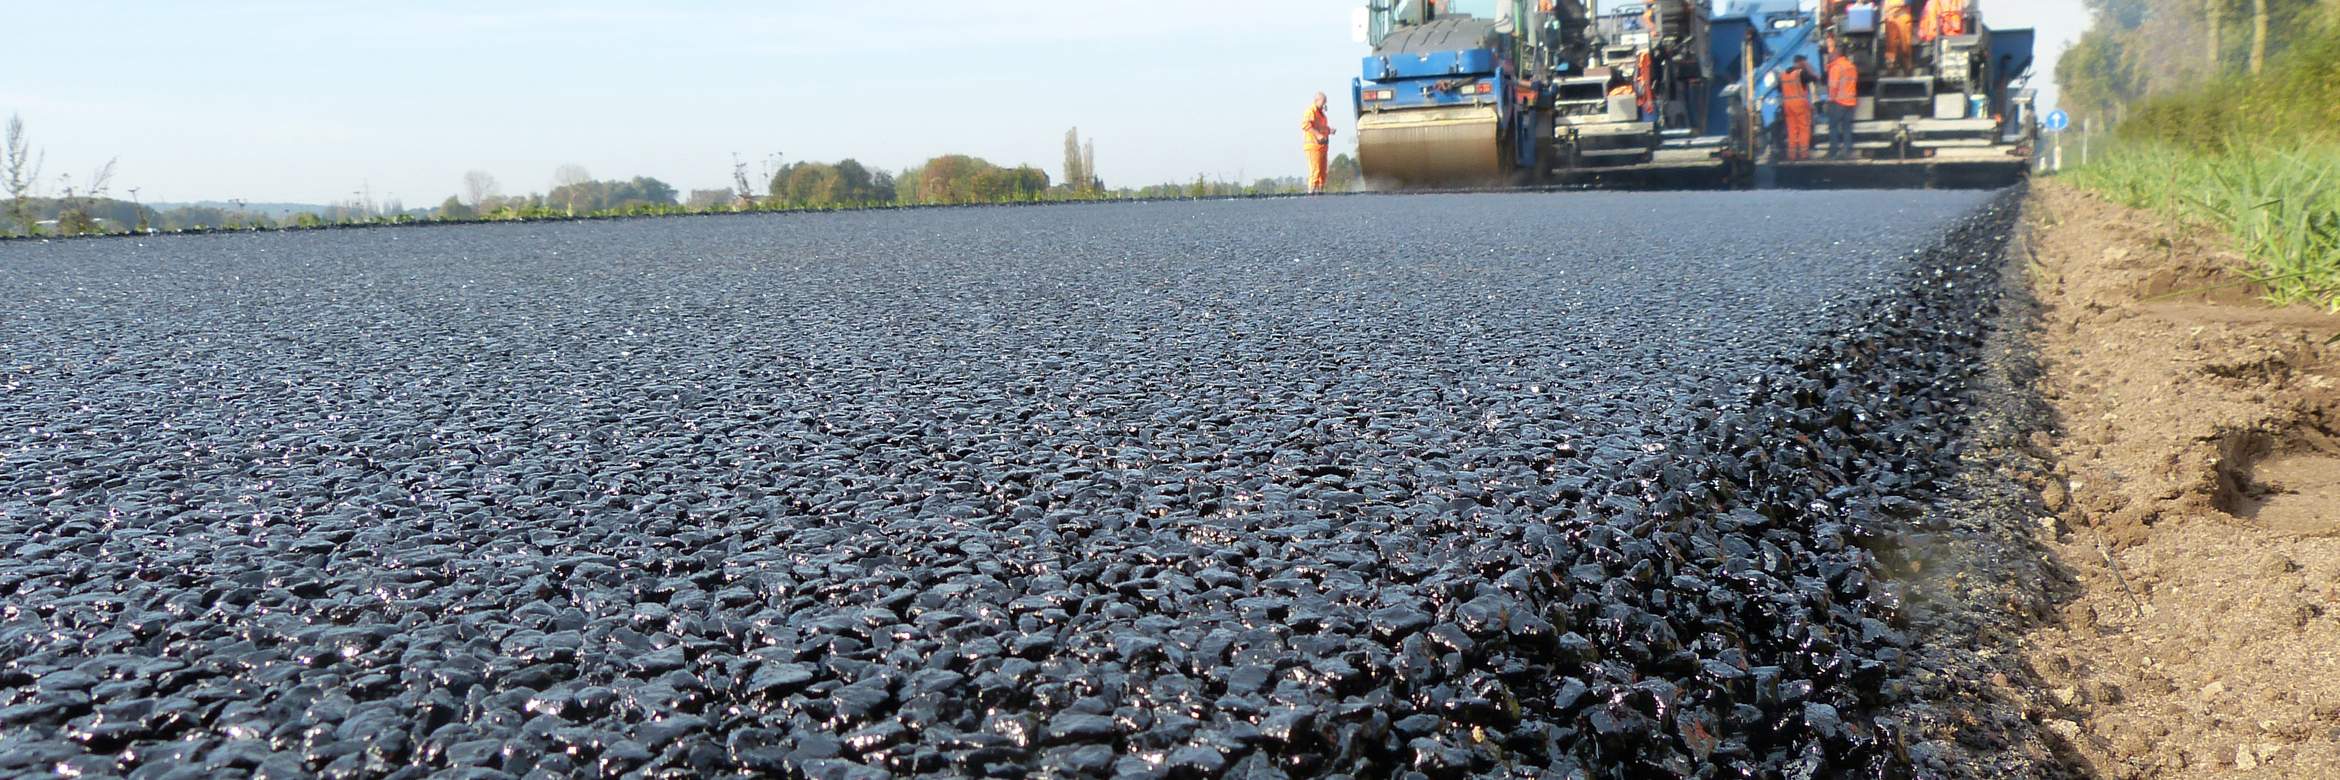 Polymeer gemodificeerd bitumen (PMB) van Esha voor hoogwaardige asfaltmengsels